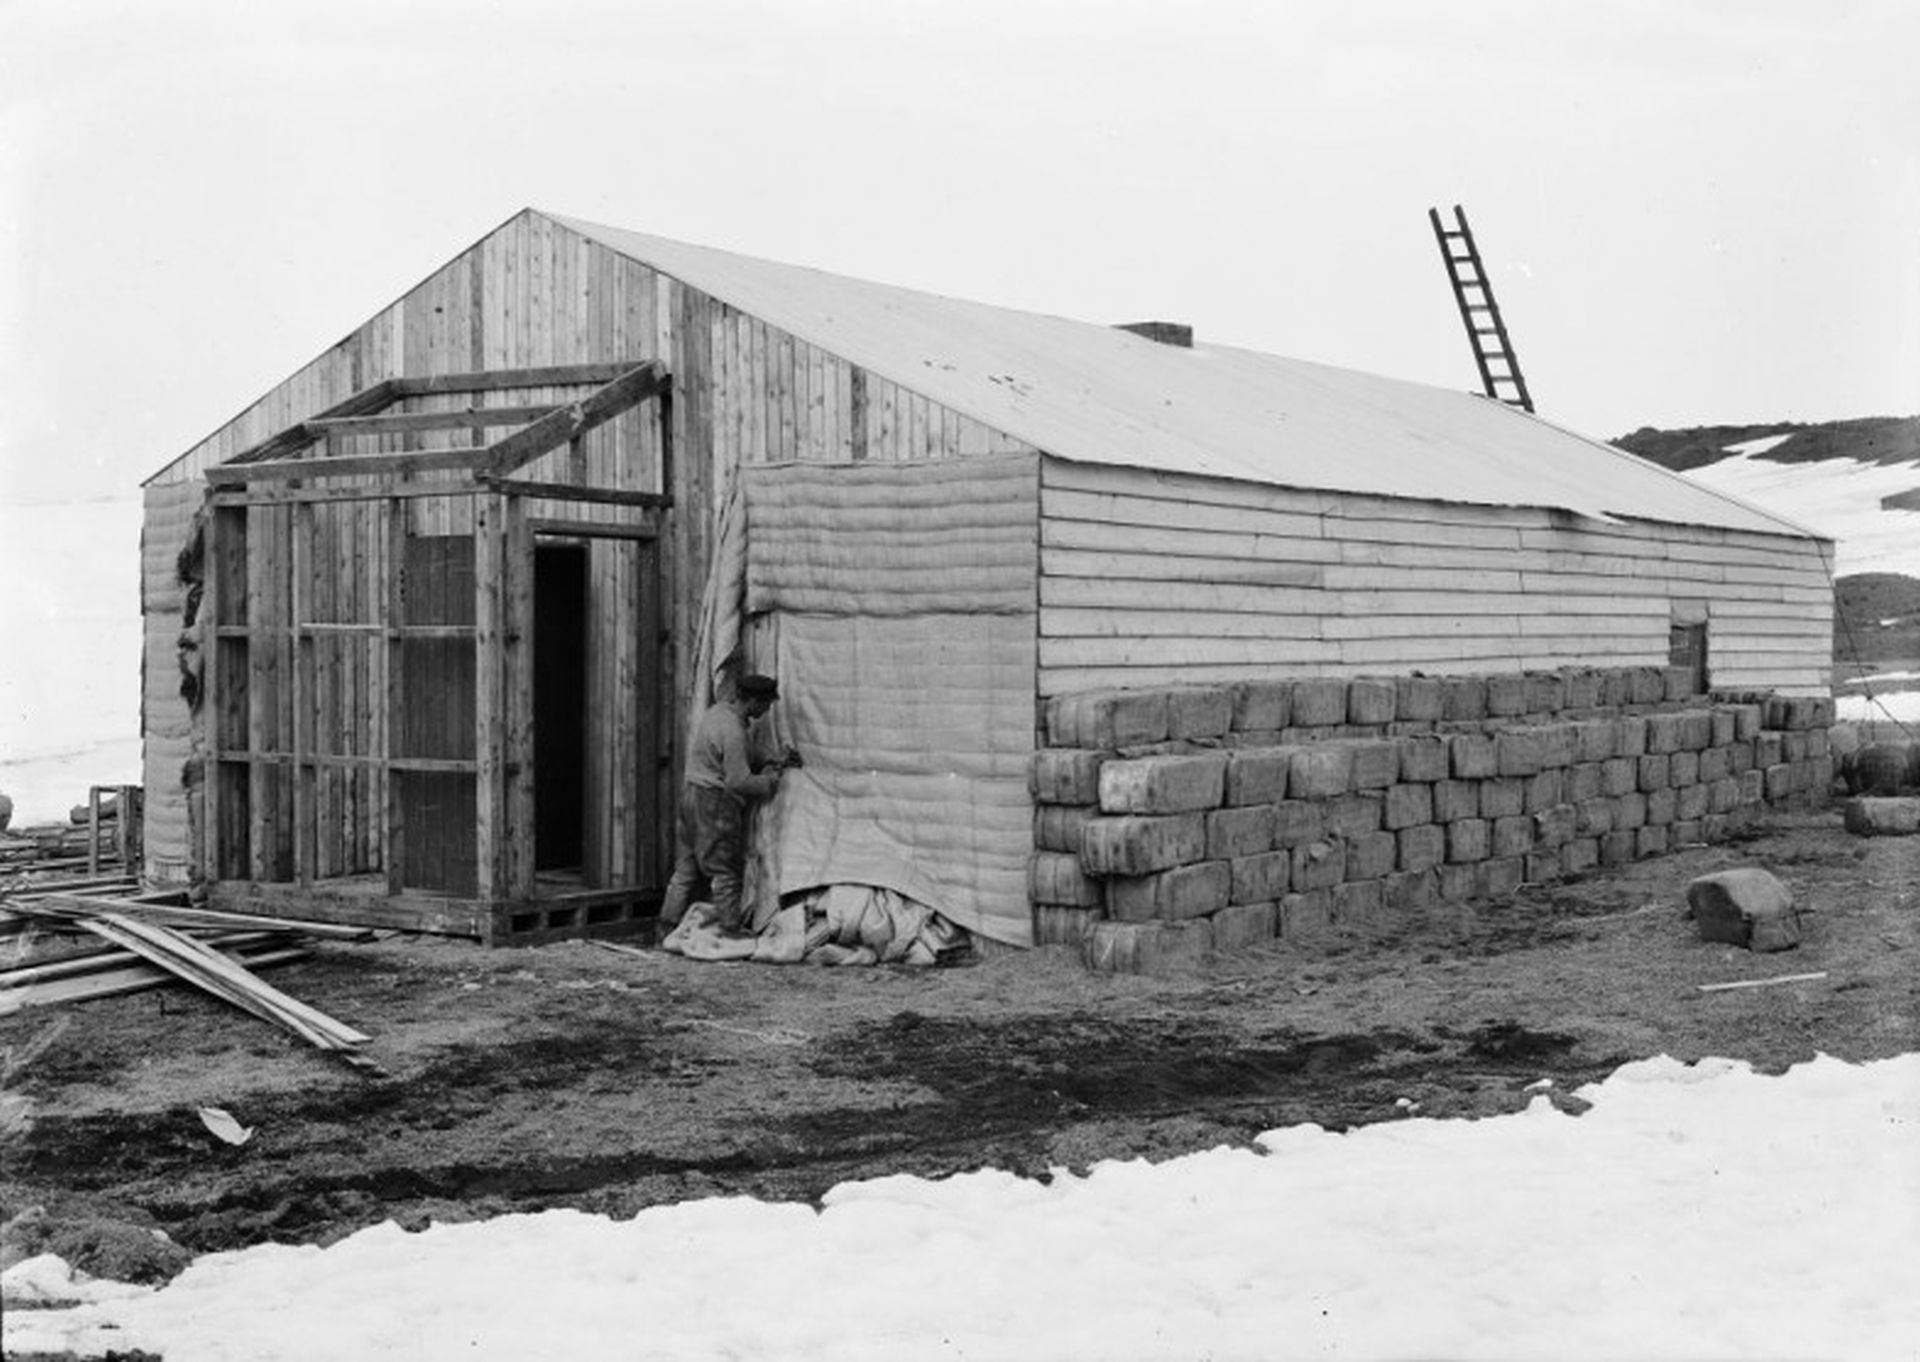 Davis, the carpenter, working on Terra Nova hut, January 9th 1911